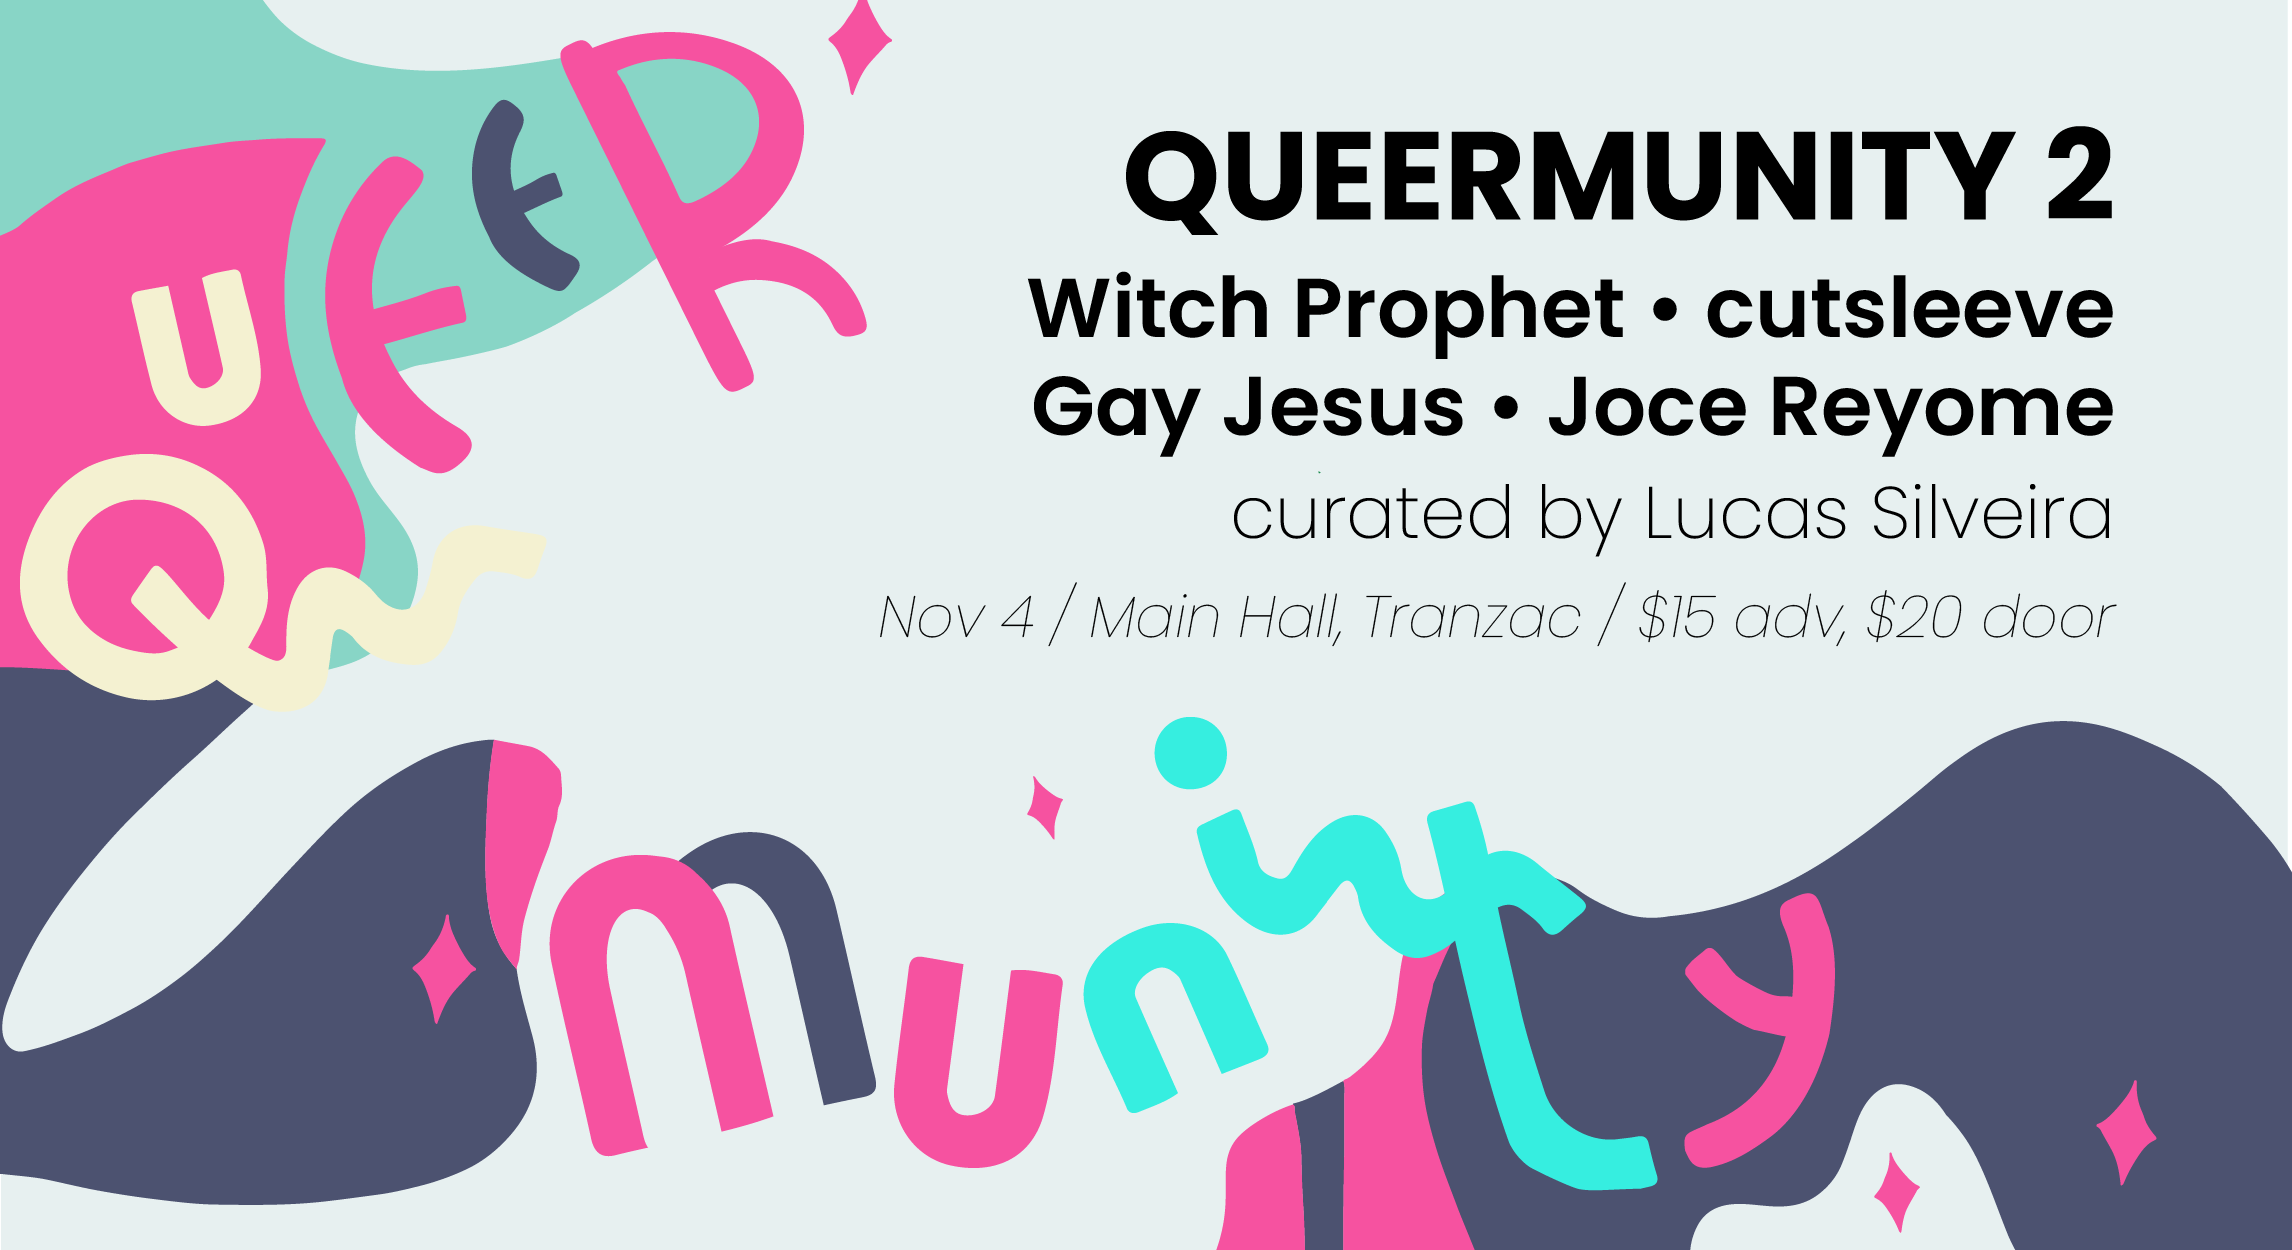 Queermunity 2, November 4, 2022 featuring Witch Prophet, Cutsleeve, Gay Jesus, Joce Reyome, Curator & Host, Lucas Silveira